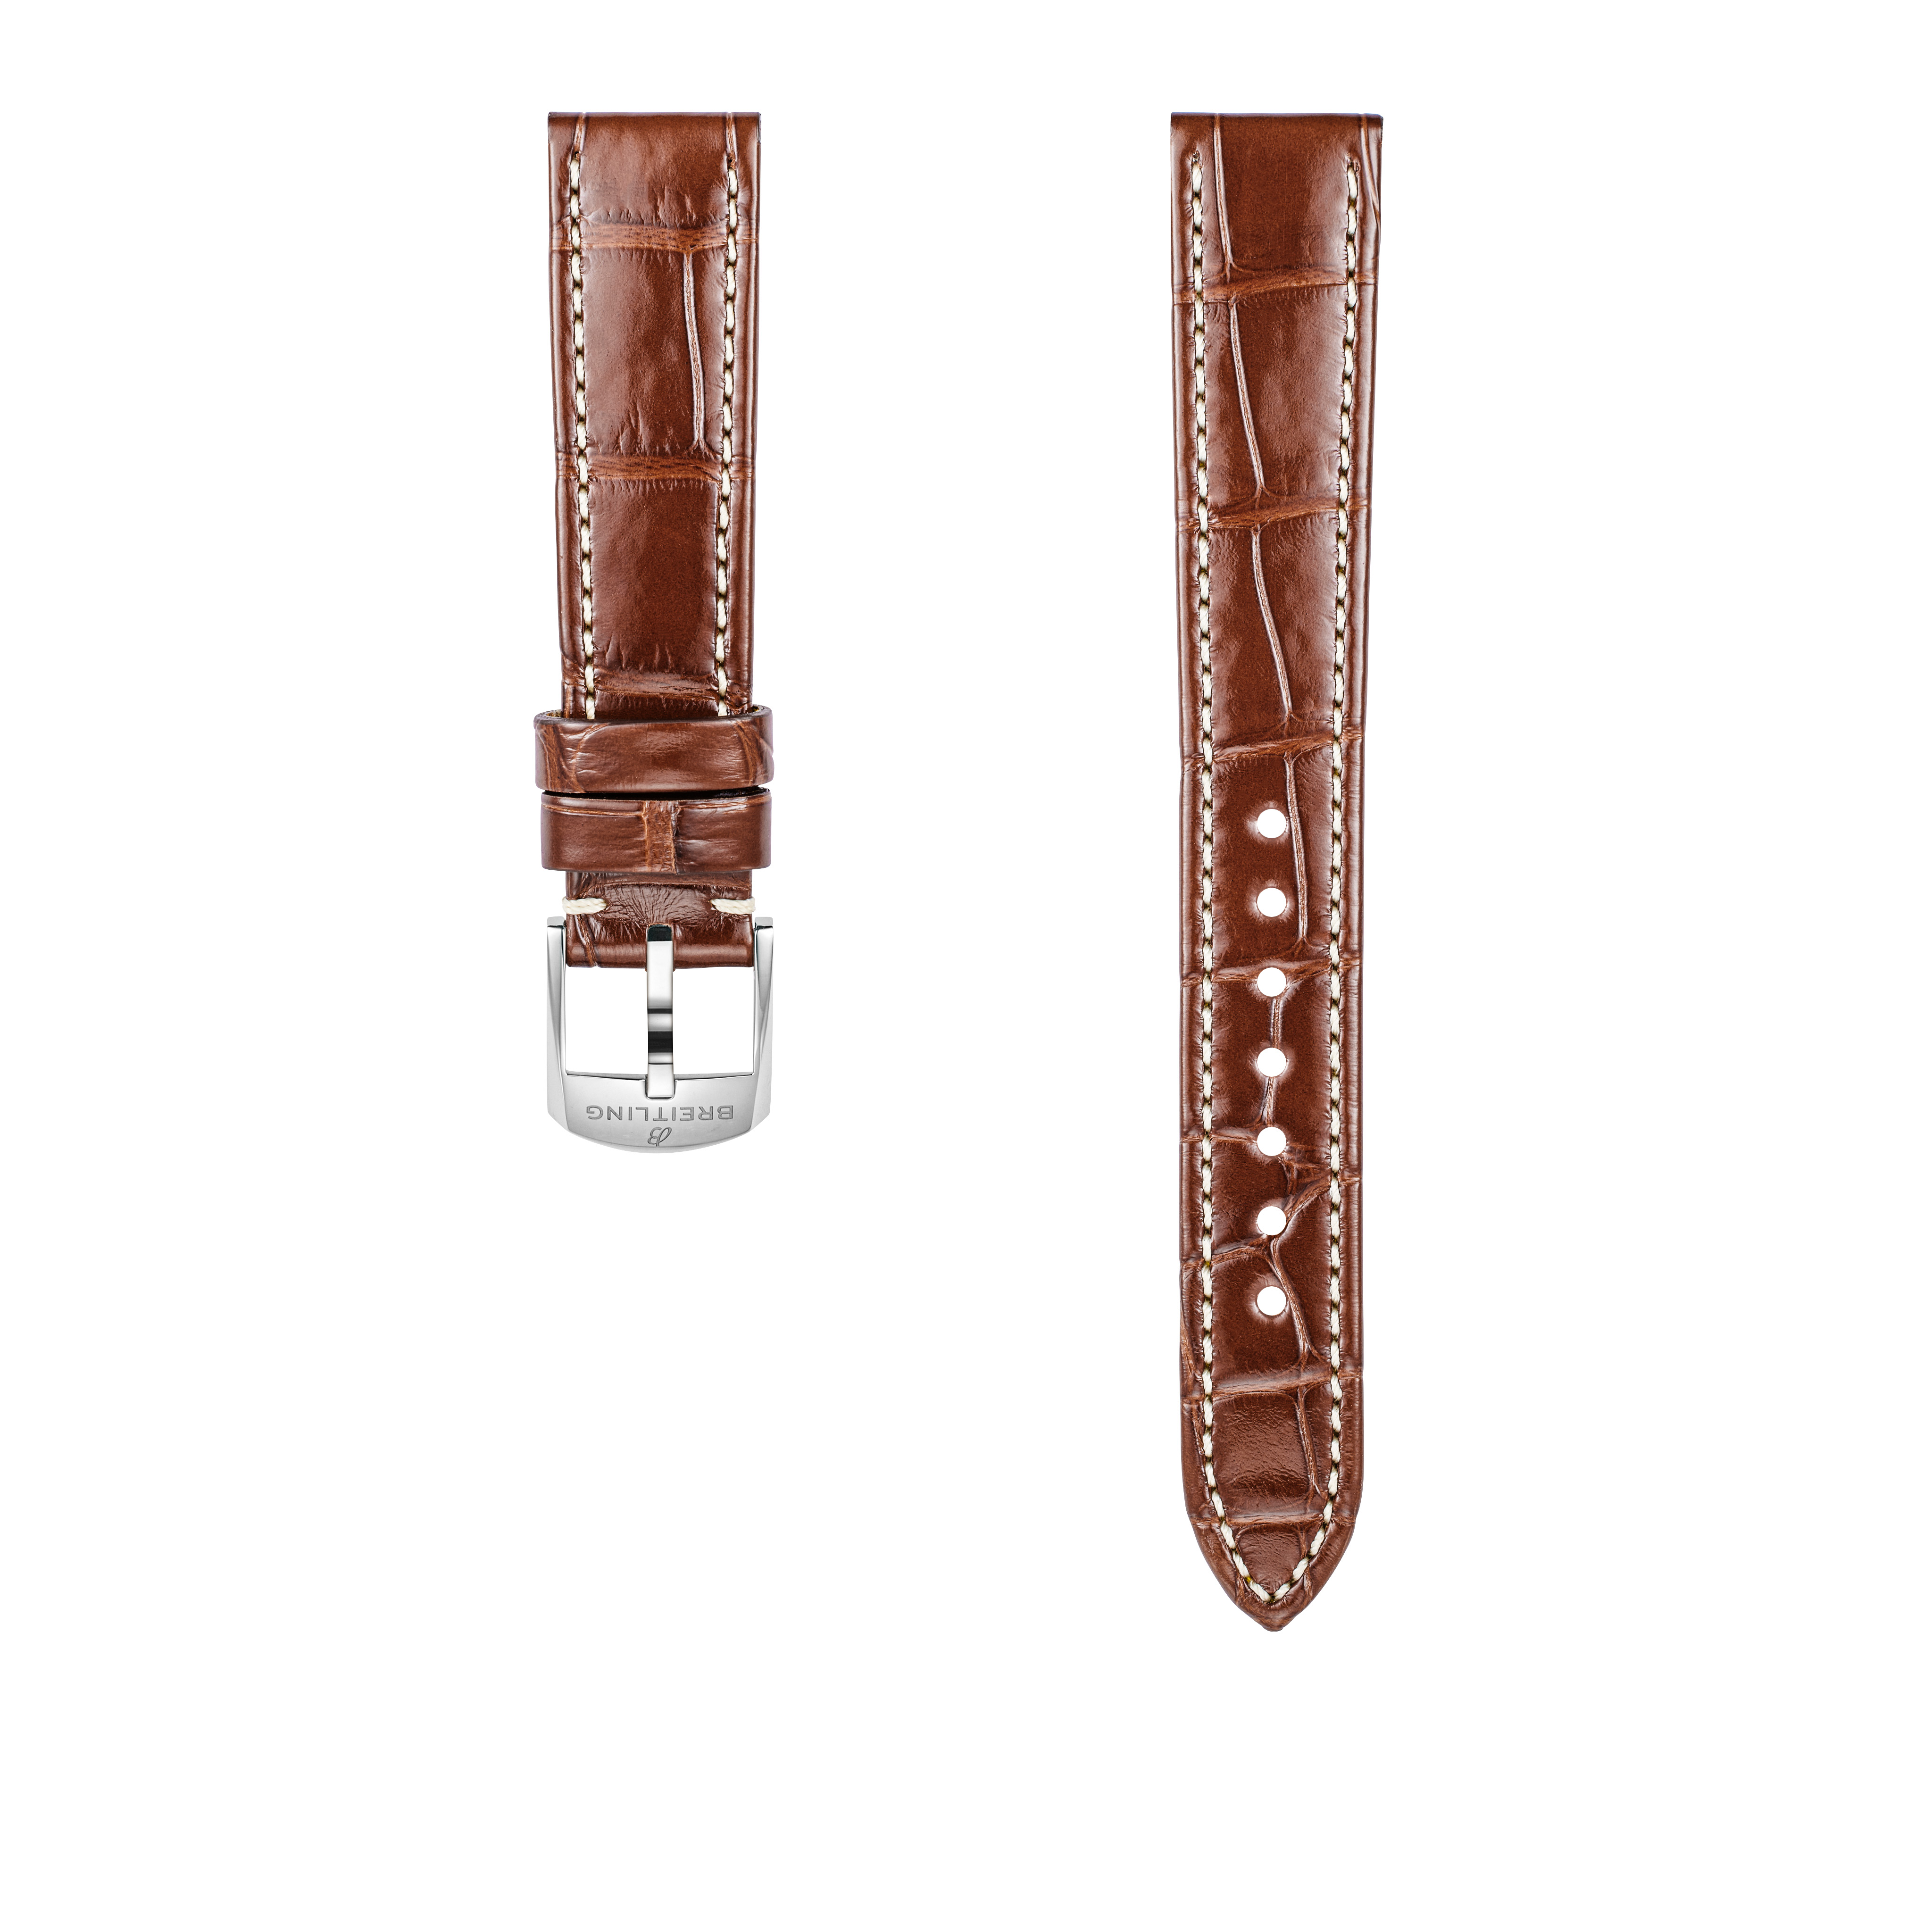 Brown alligator leather strap - 16 mm